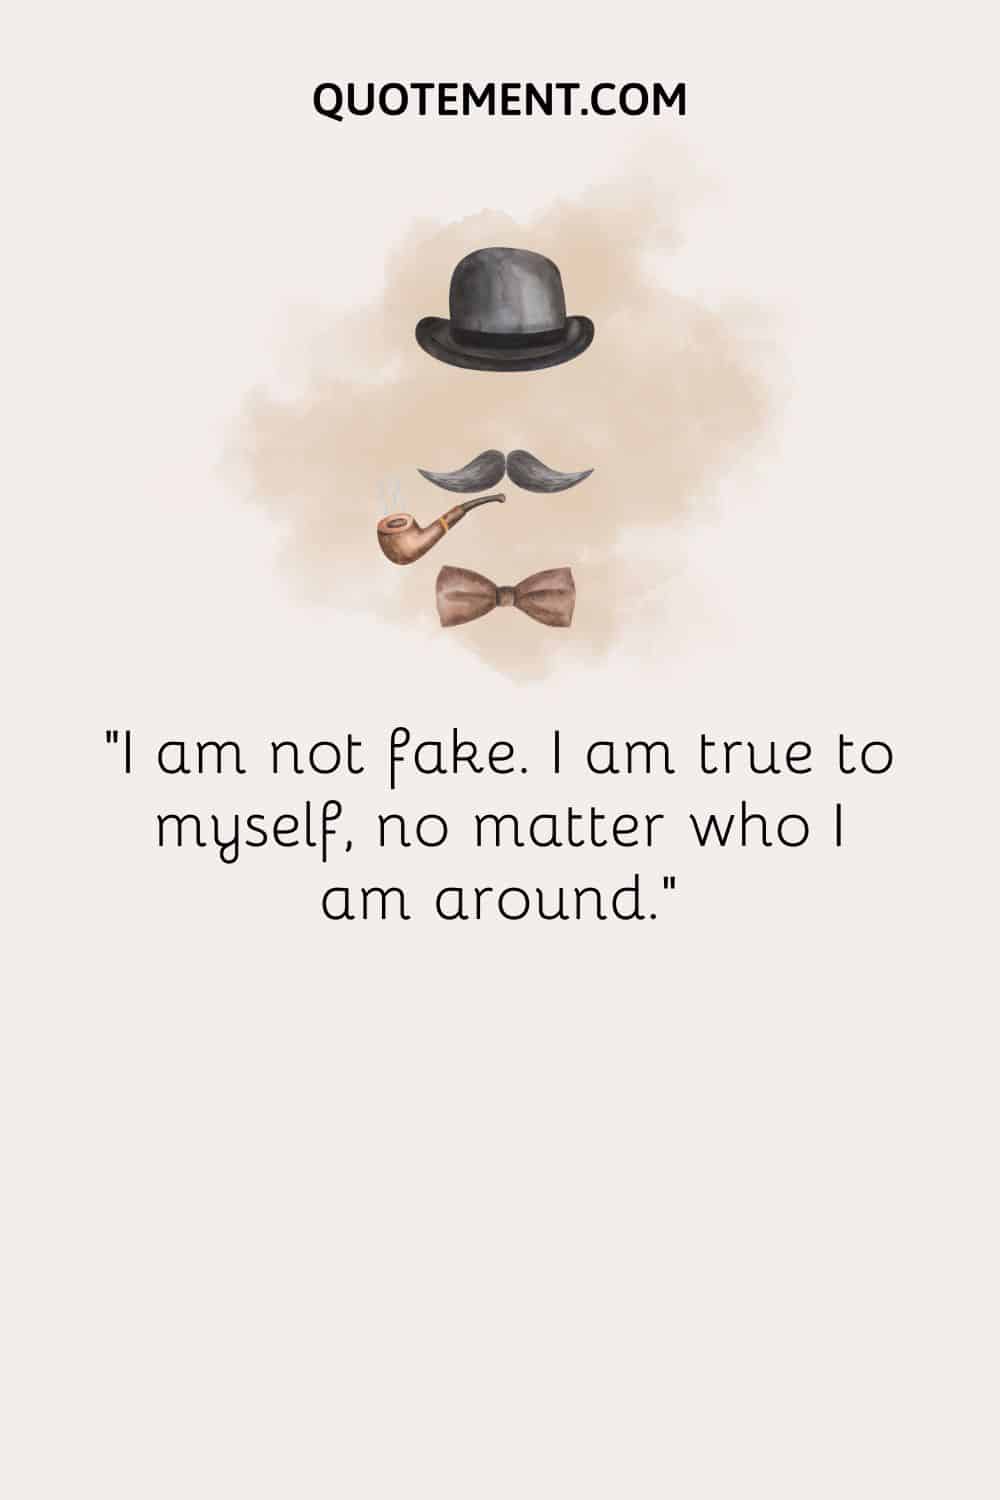 I am not fake. I am true to myself, no matter who I am around